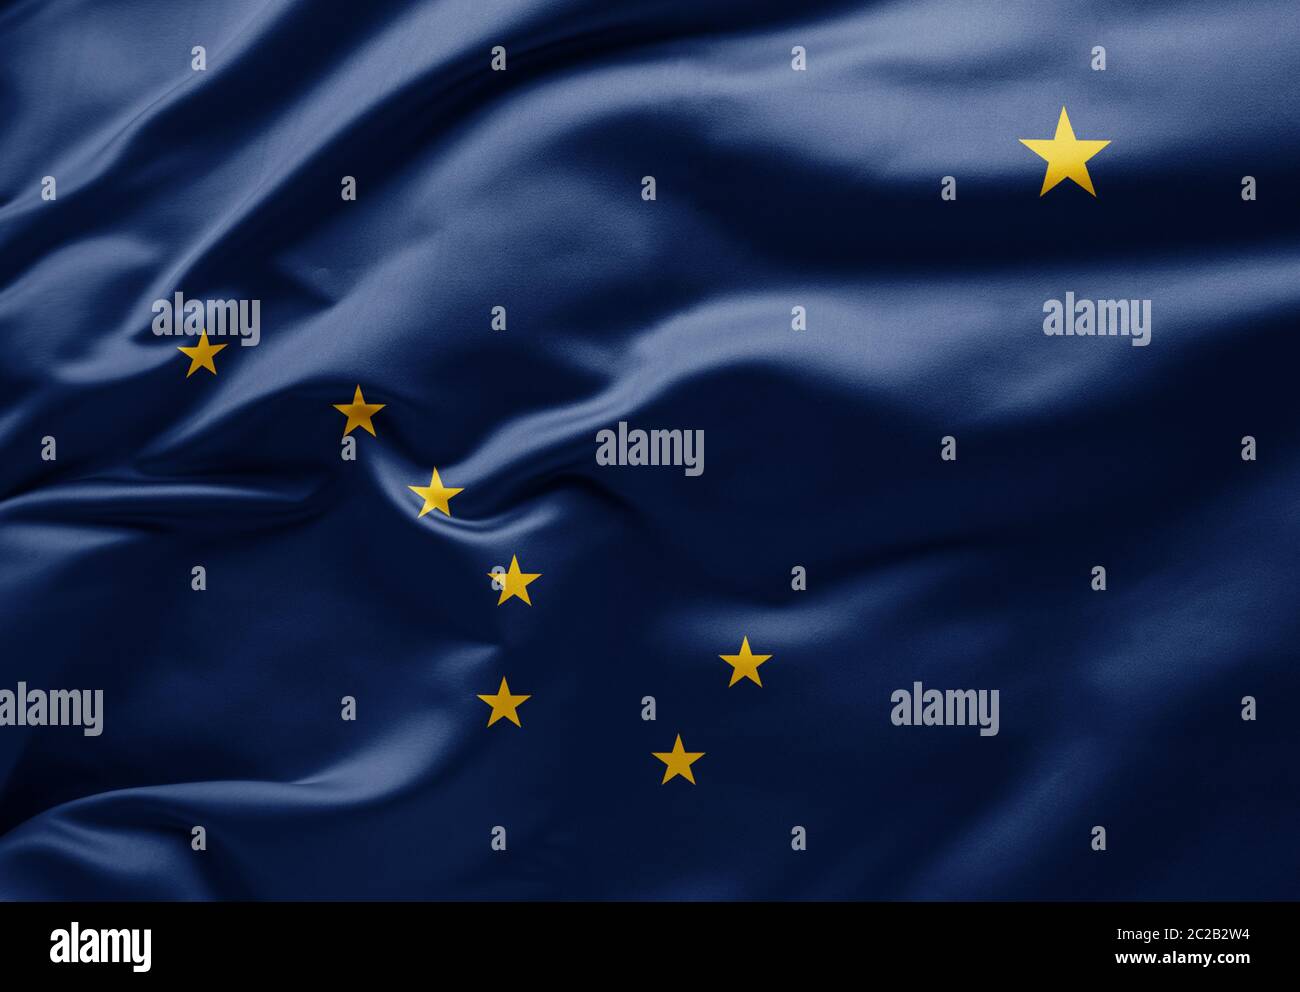 Waving state flag of Alaska - United States of America Stock Photo